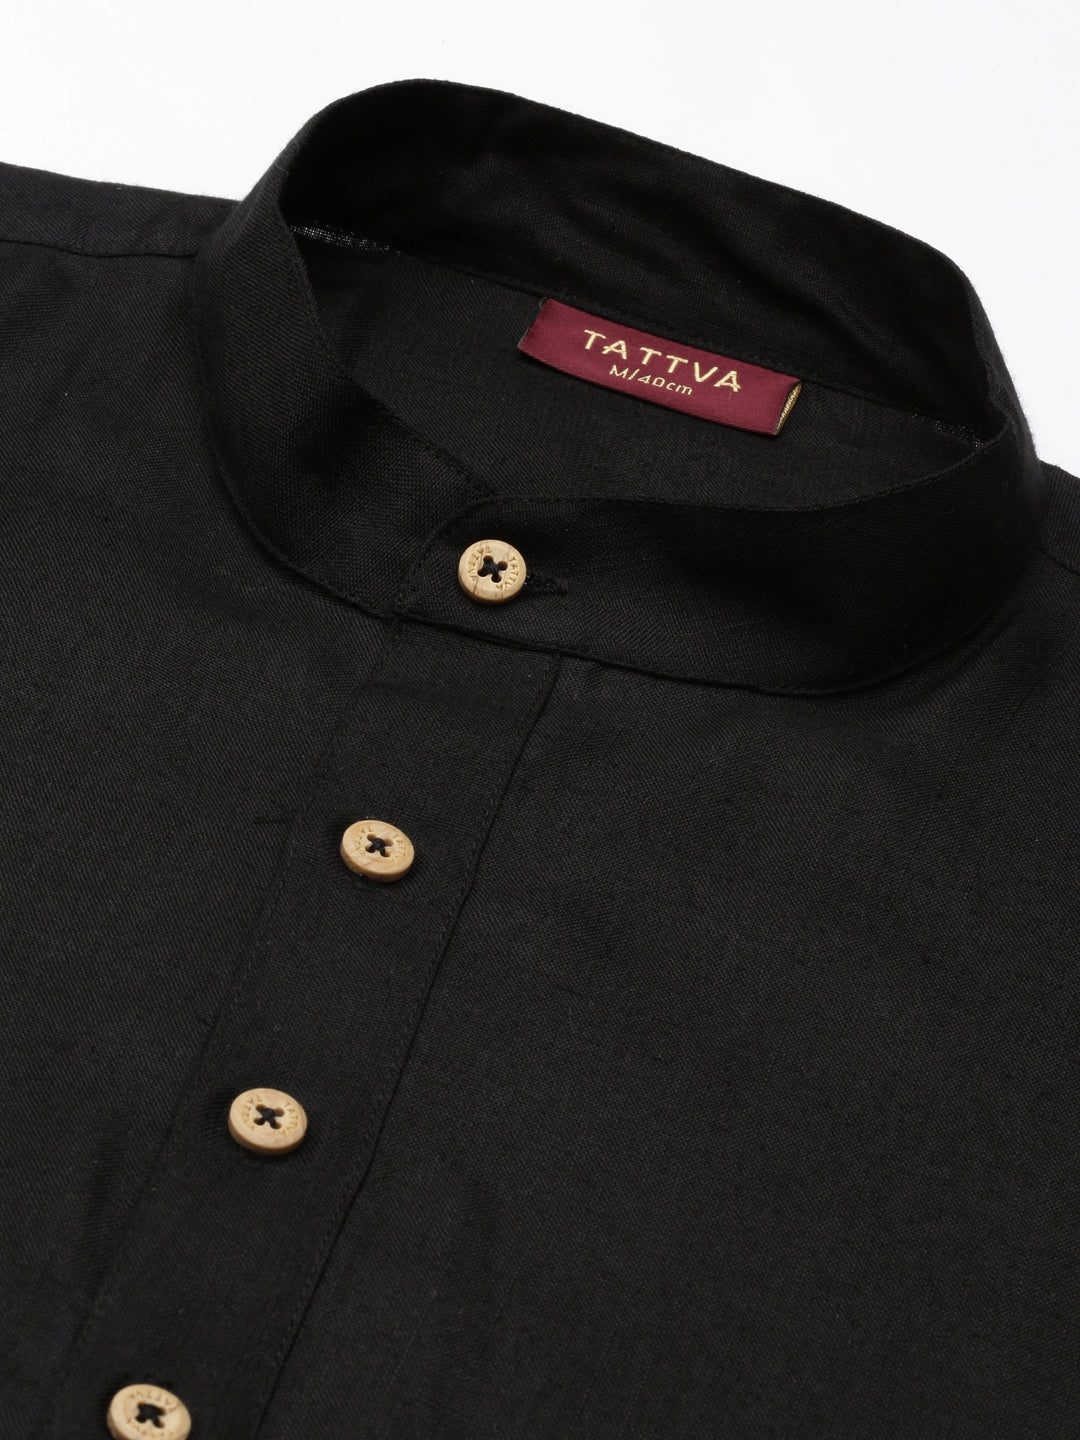 Buy Tattva Plain Black Short Kurta with Madarin Collar - Quality Product - Tattva.Life